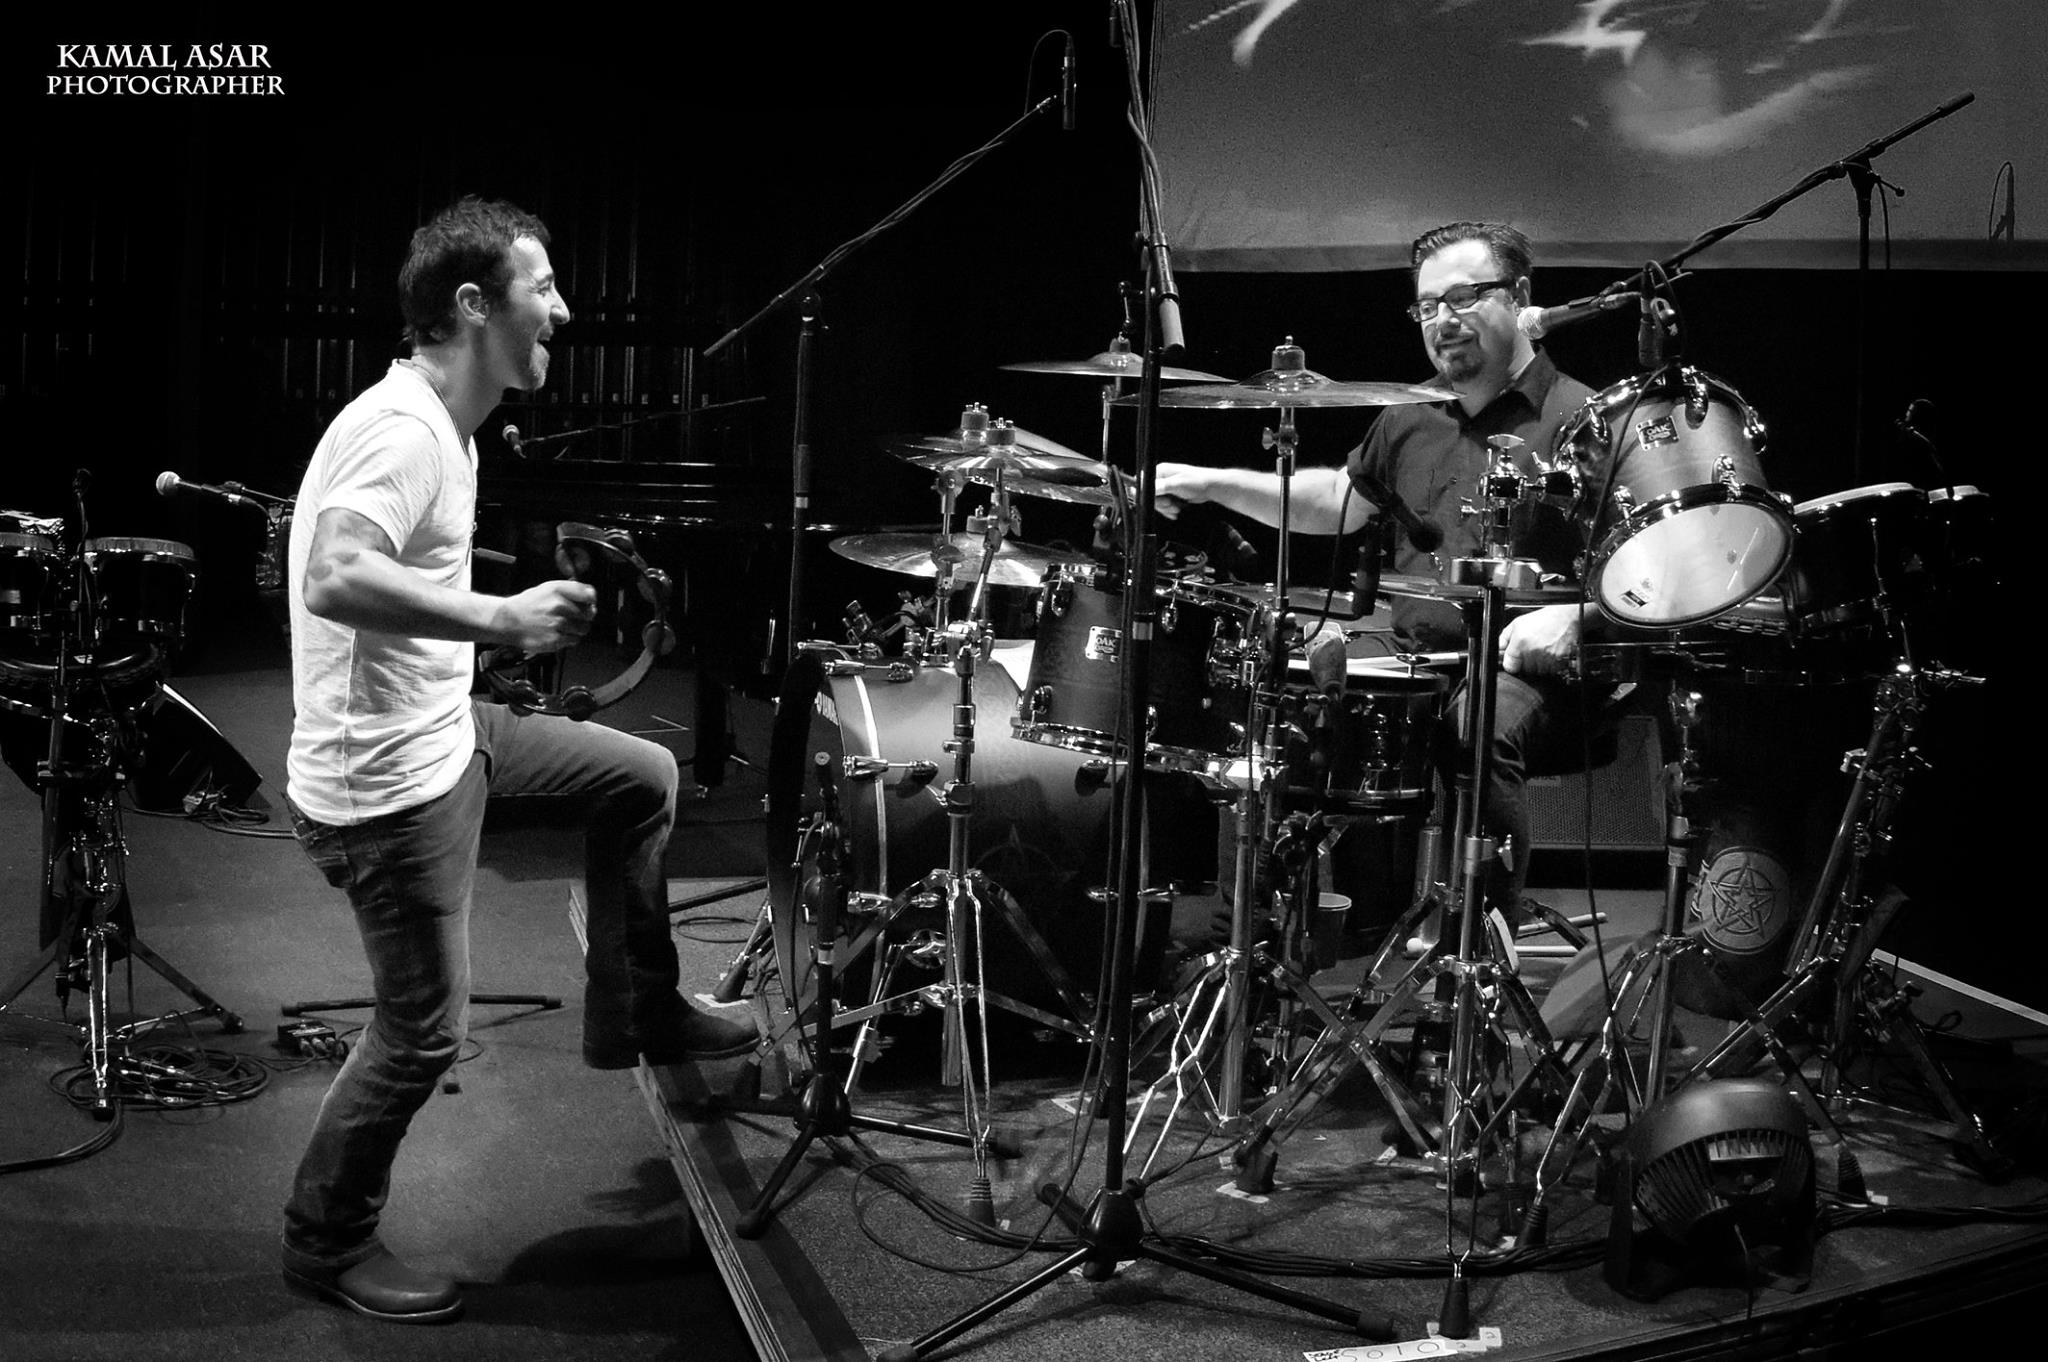 Drummer David Stefanelli on tour with Godsmack's Sully Erna and Avalon.